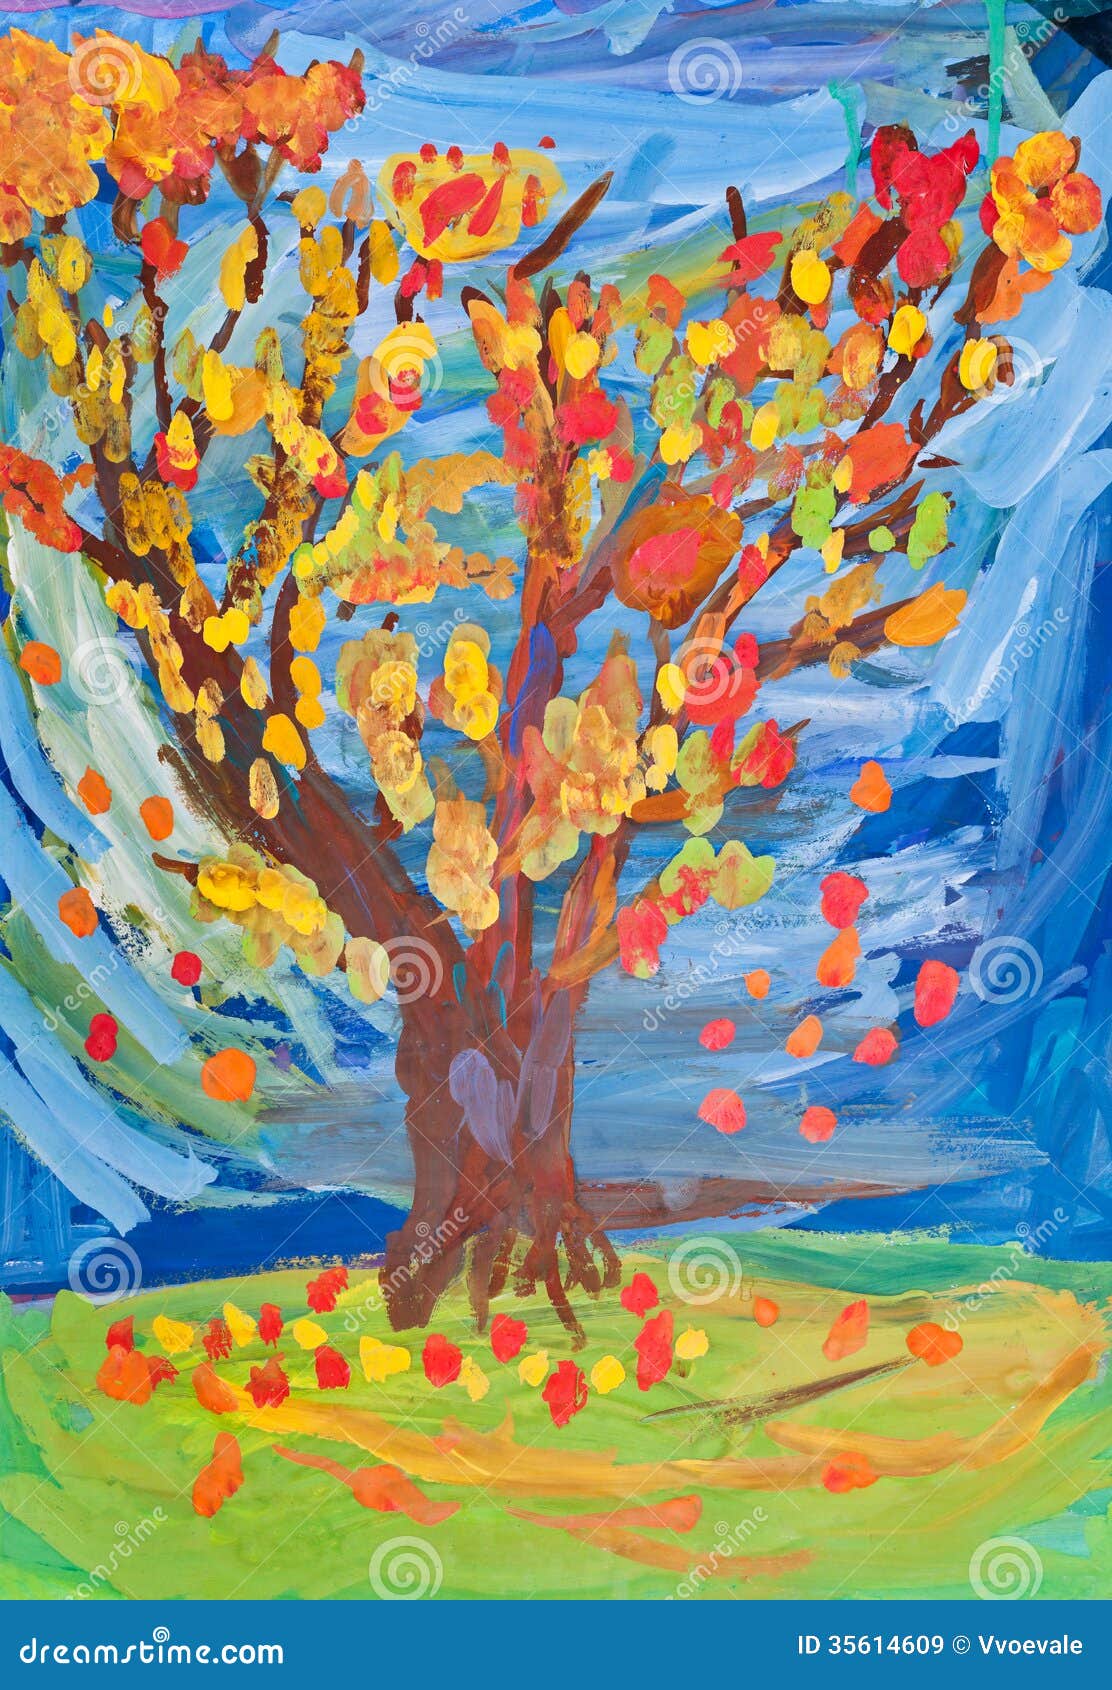 Осенняя картина красками в детский сад